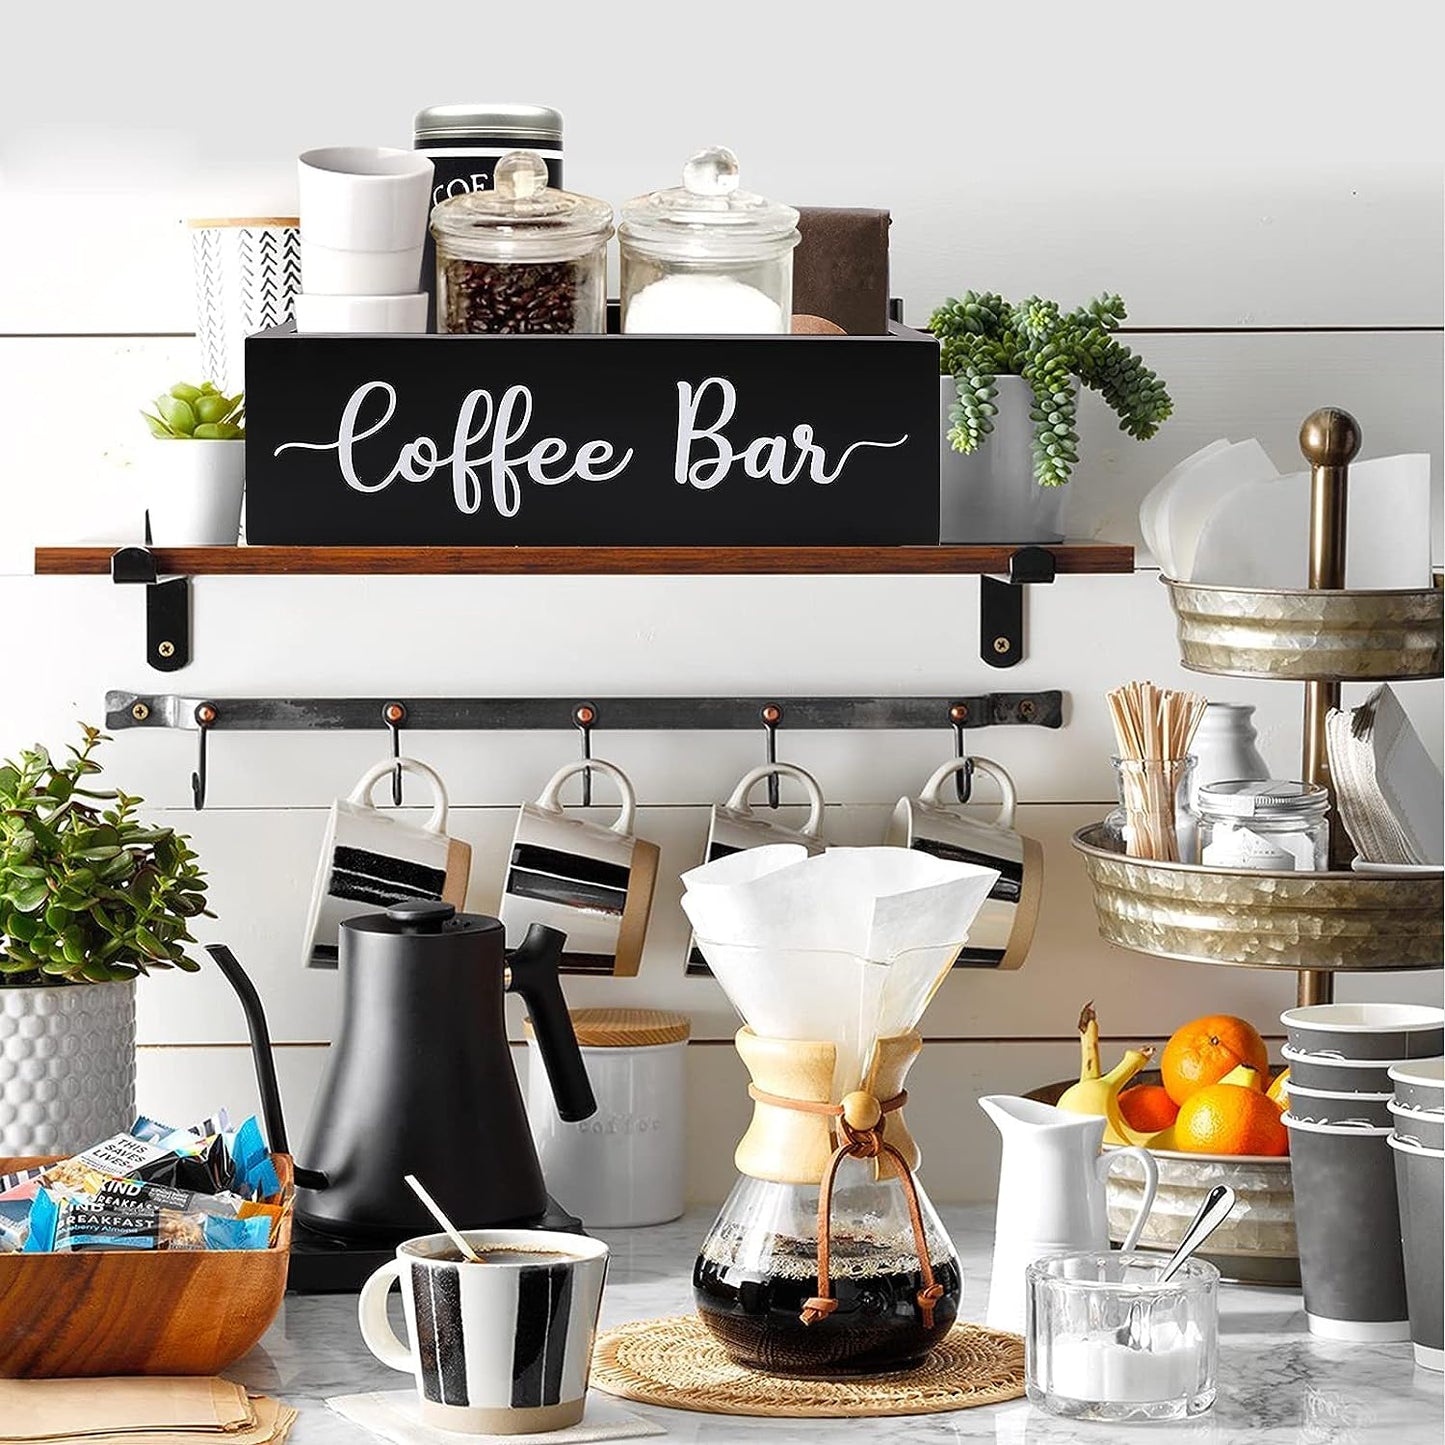 Coffee Bar Wooden Box Coffee Station Organize- Black momhomedecor